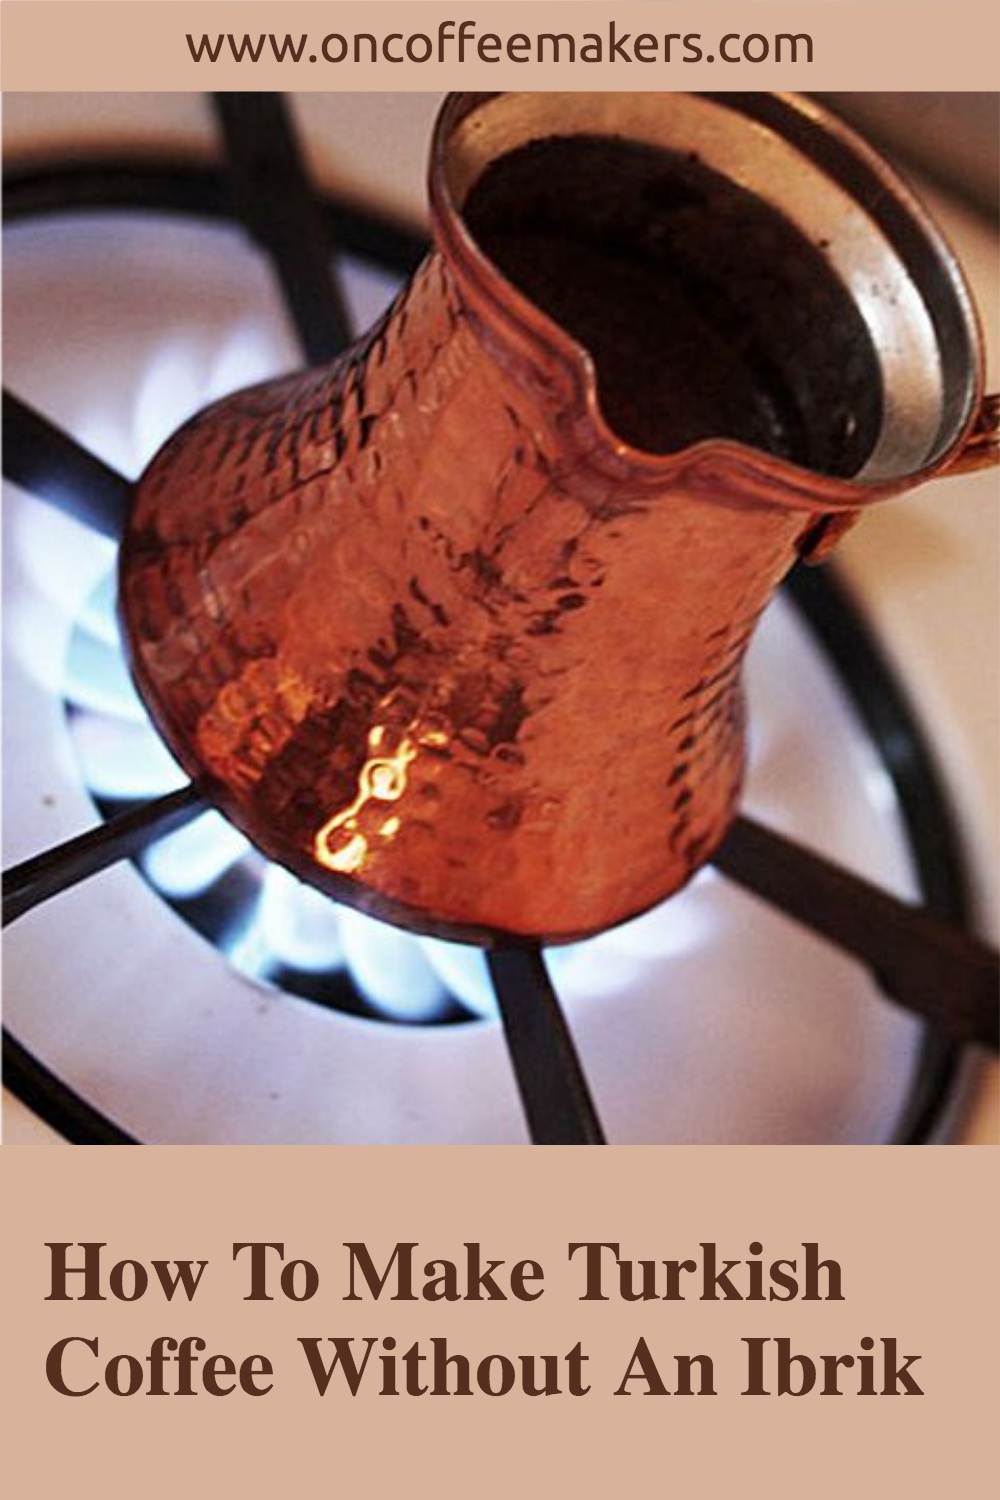 How-To-Make-Turkish-Coffee-Without-An-Ibrik.jpg